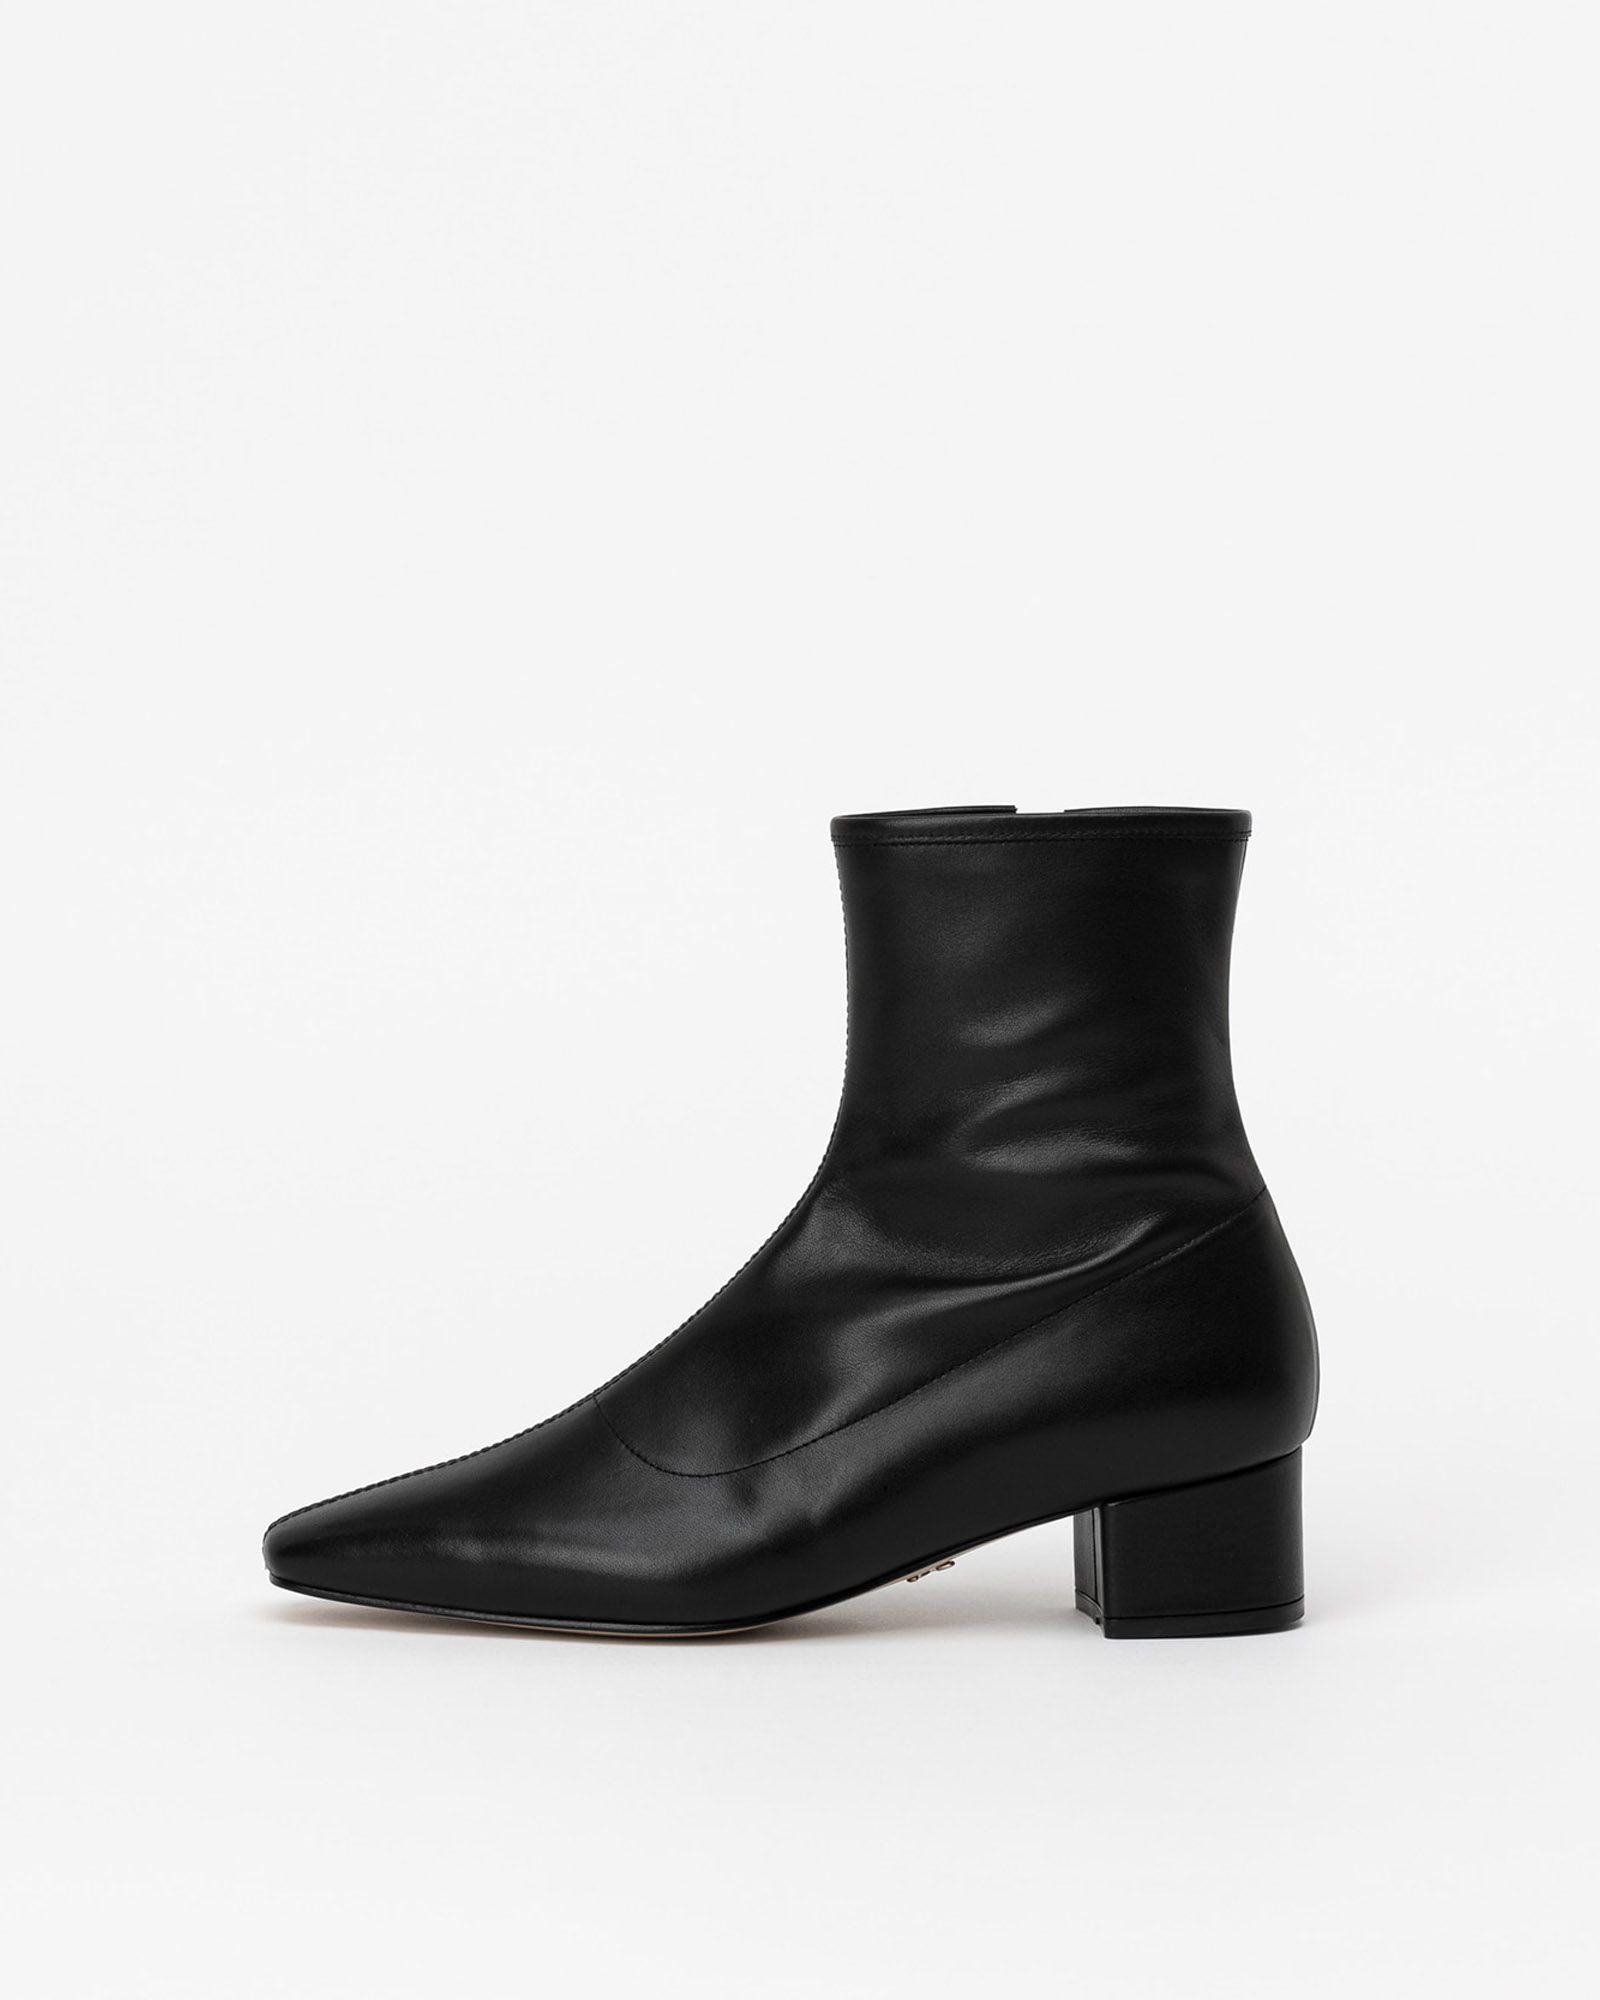 Monique Soft Boots in Regular Black